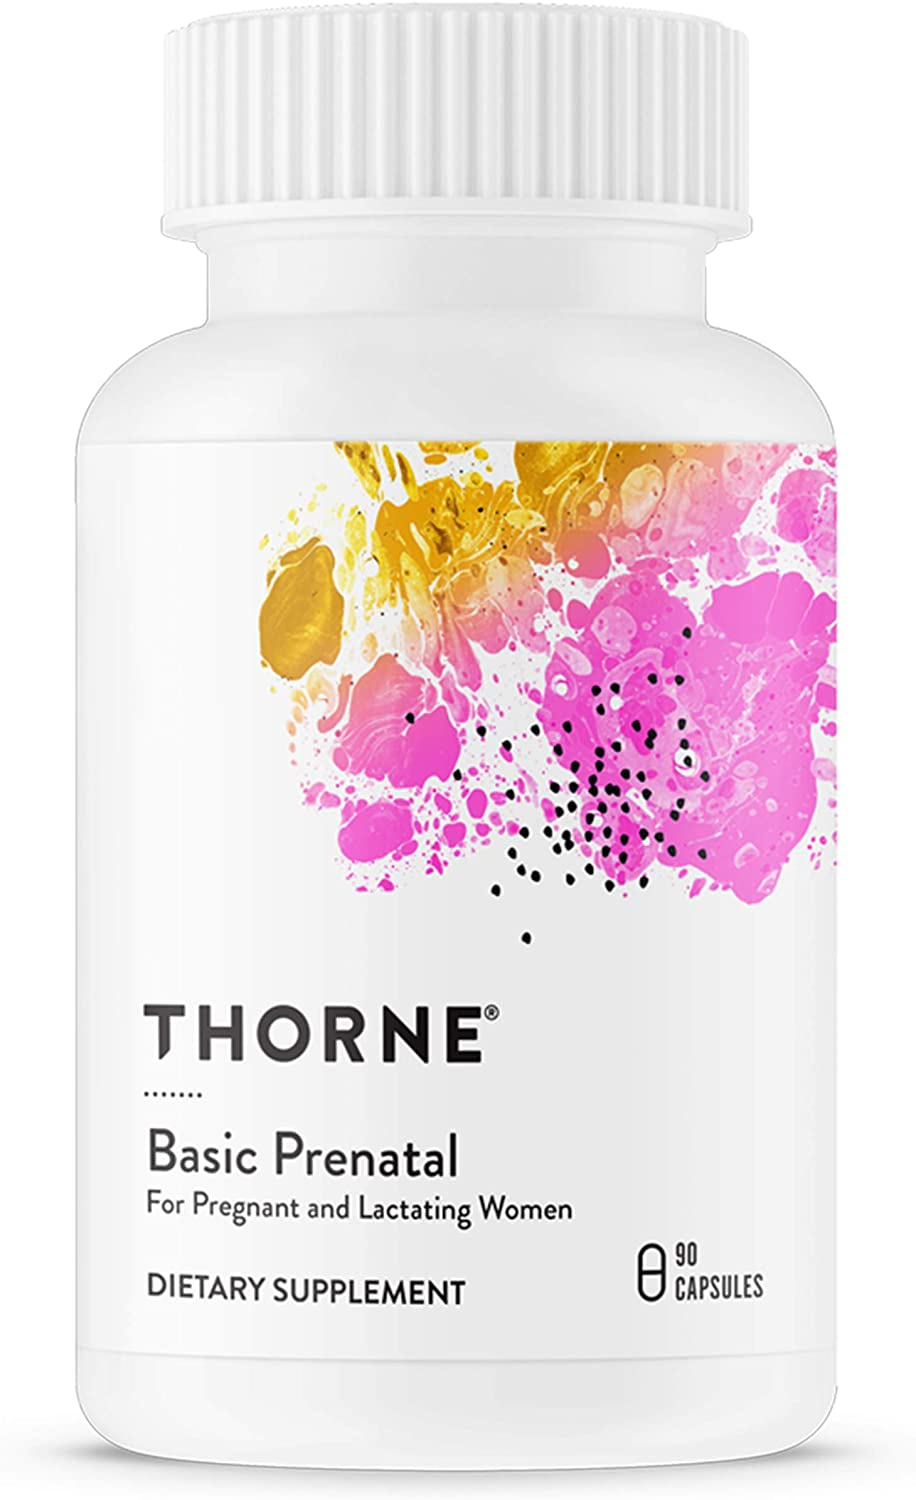 - Basic Prenatal - Folate Multivitamin for Pregnant and Lactating Women - 90 Capsules